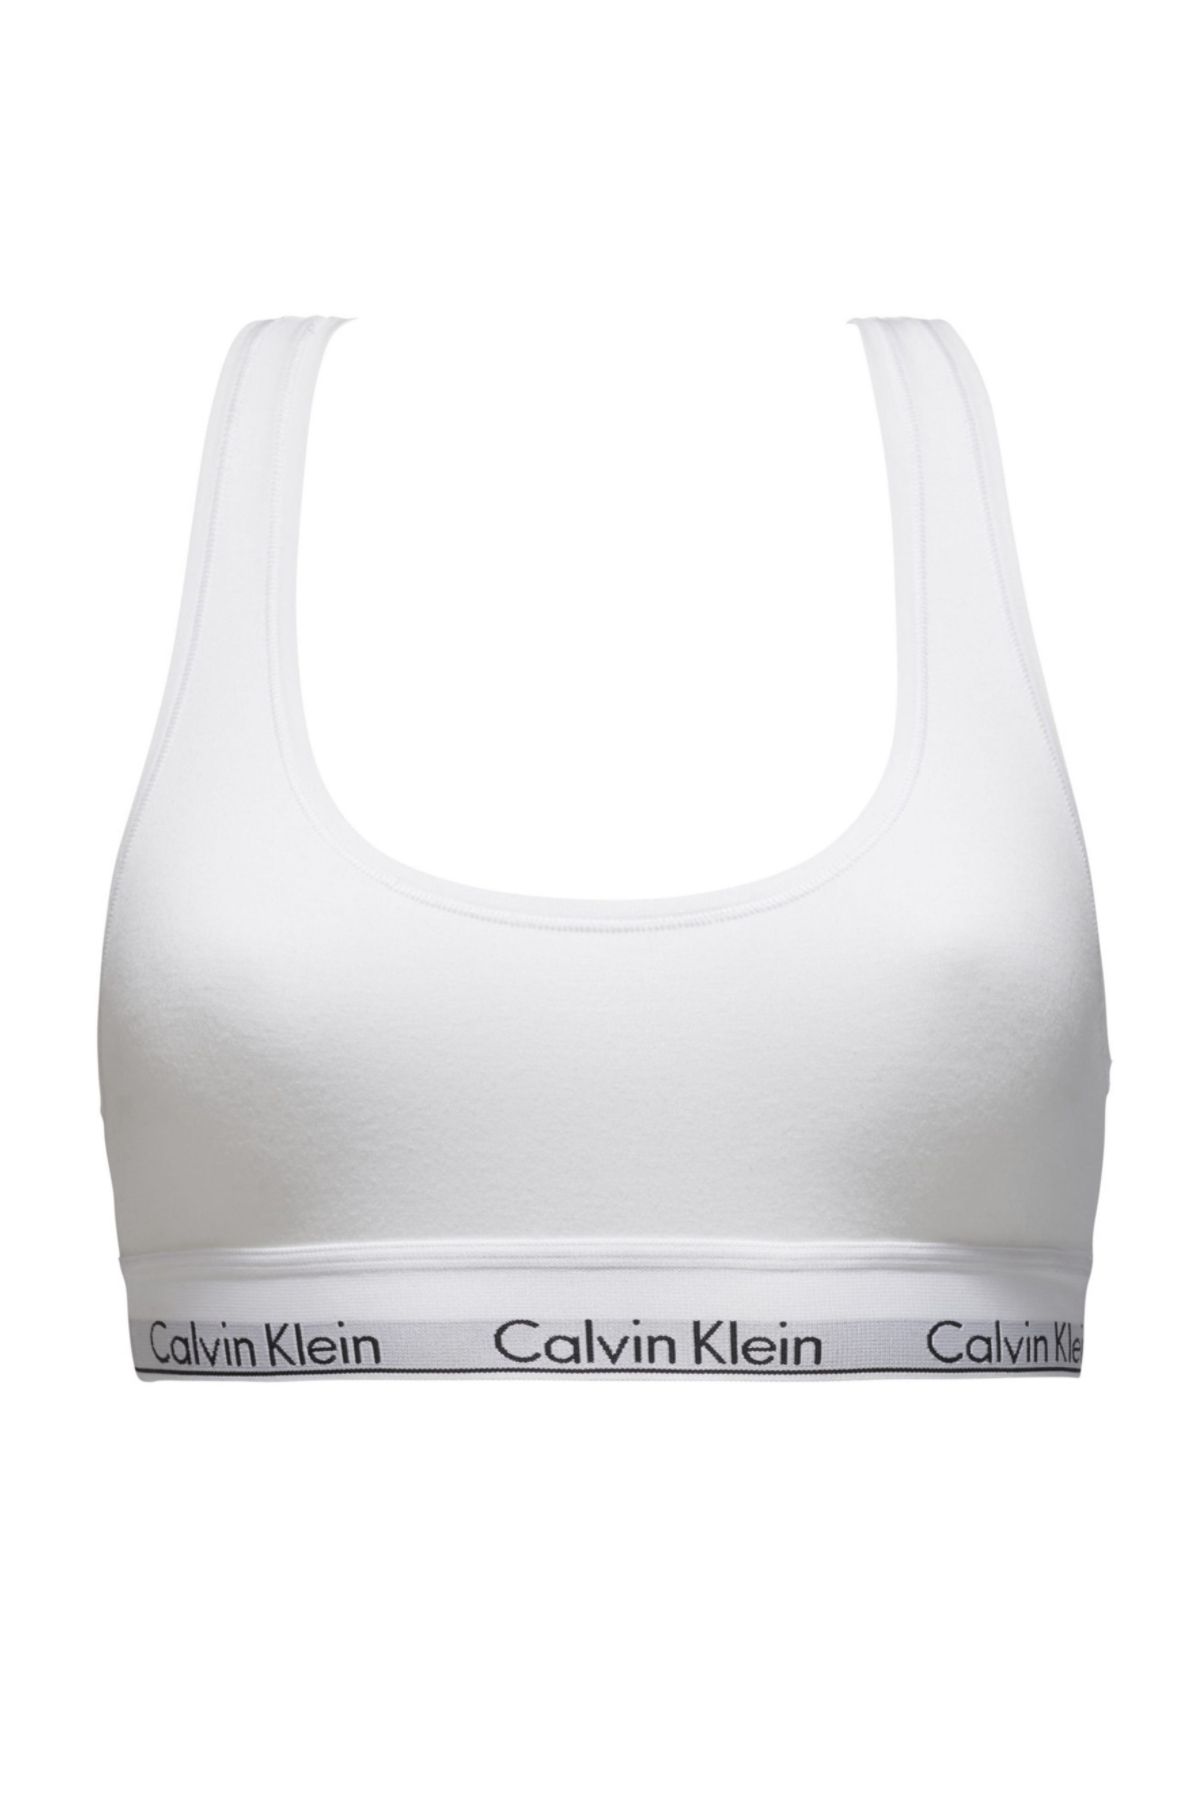 Calvin Klein Sports Bra - White - Sportswear - Trendyol